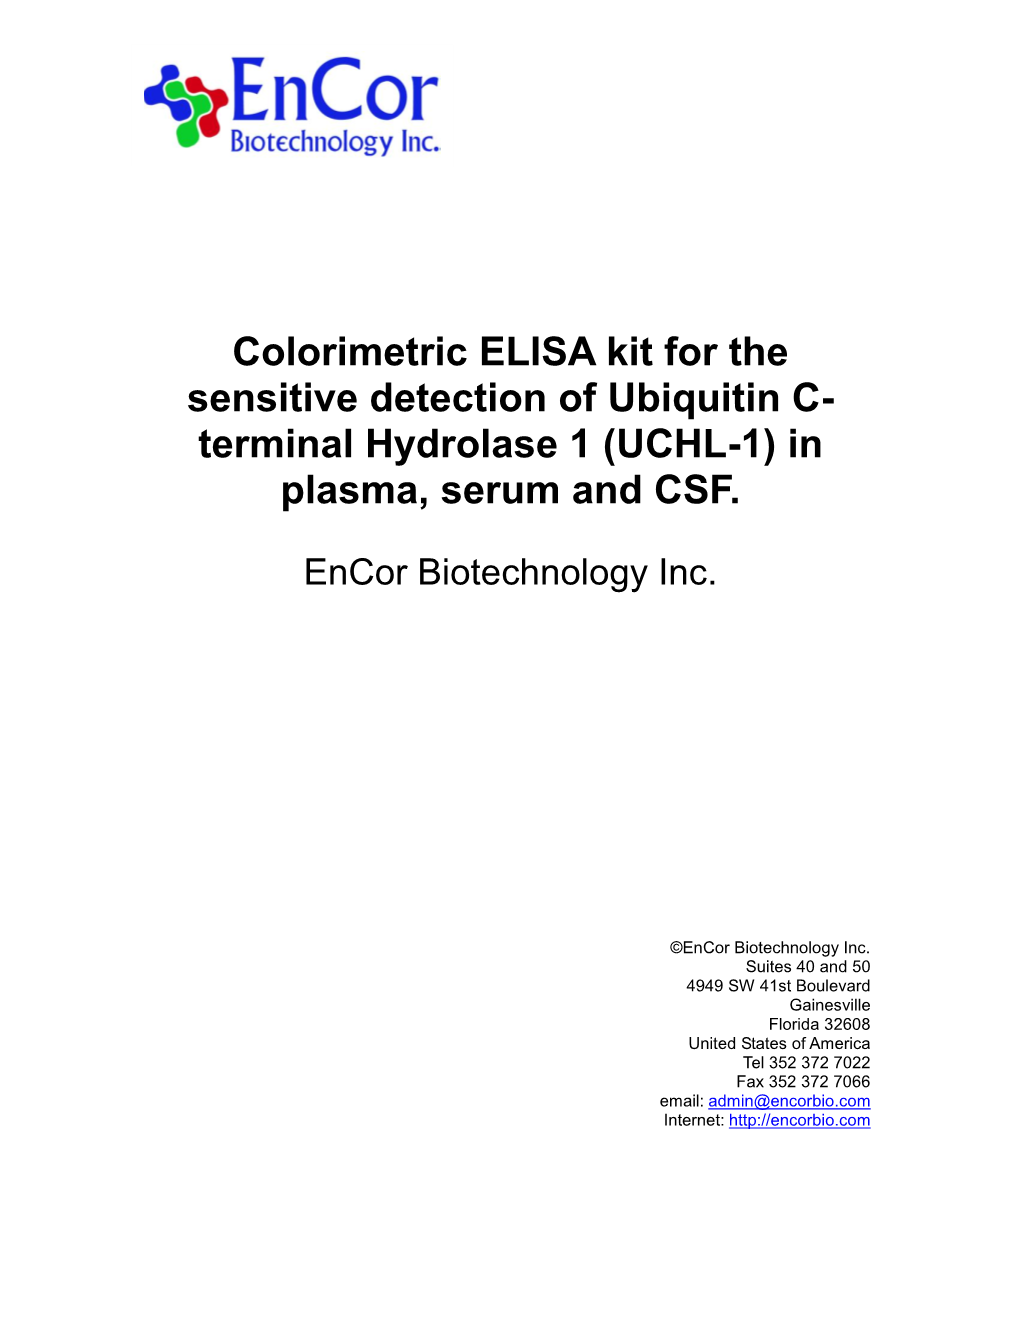 Colorimetric ELISA Kit for the Sensitive Detection of Ubiquitin C- Terminal Hydrolase 1 (UCHL-1) in Plasma, Serum and CSF